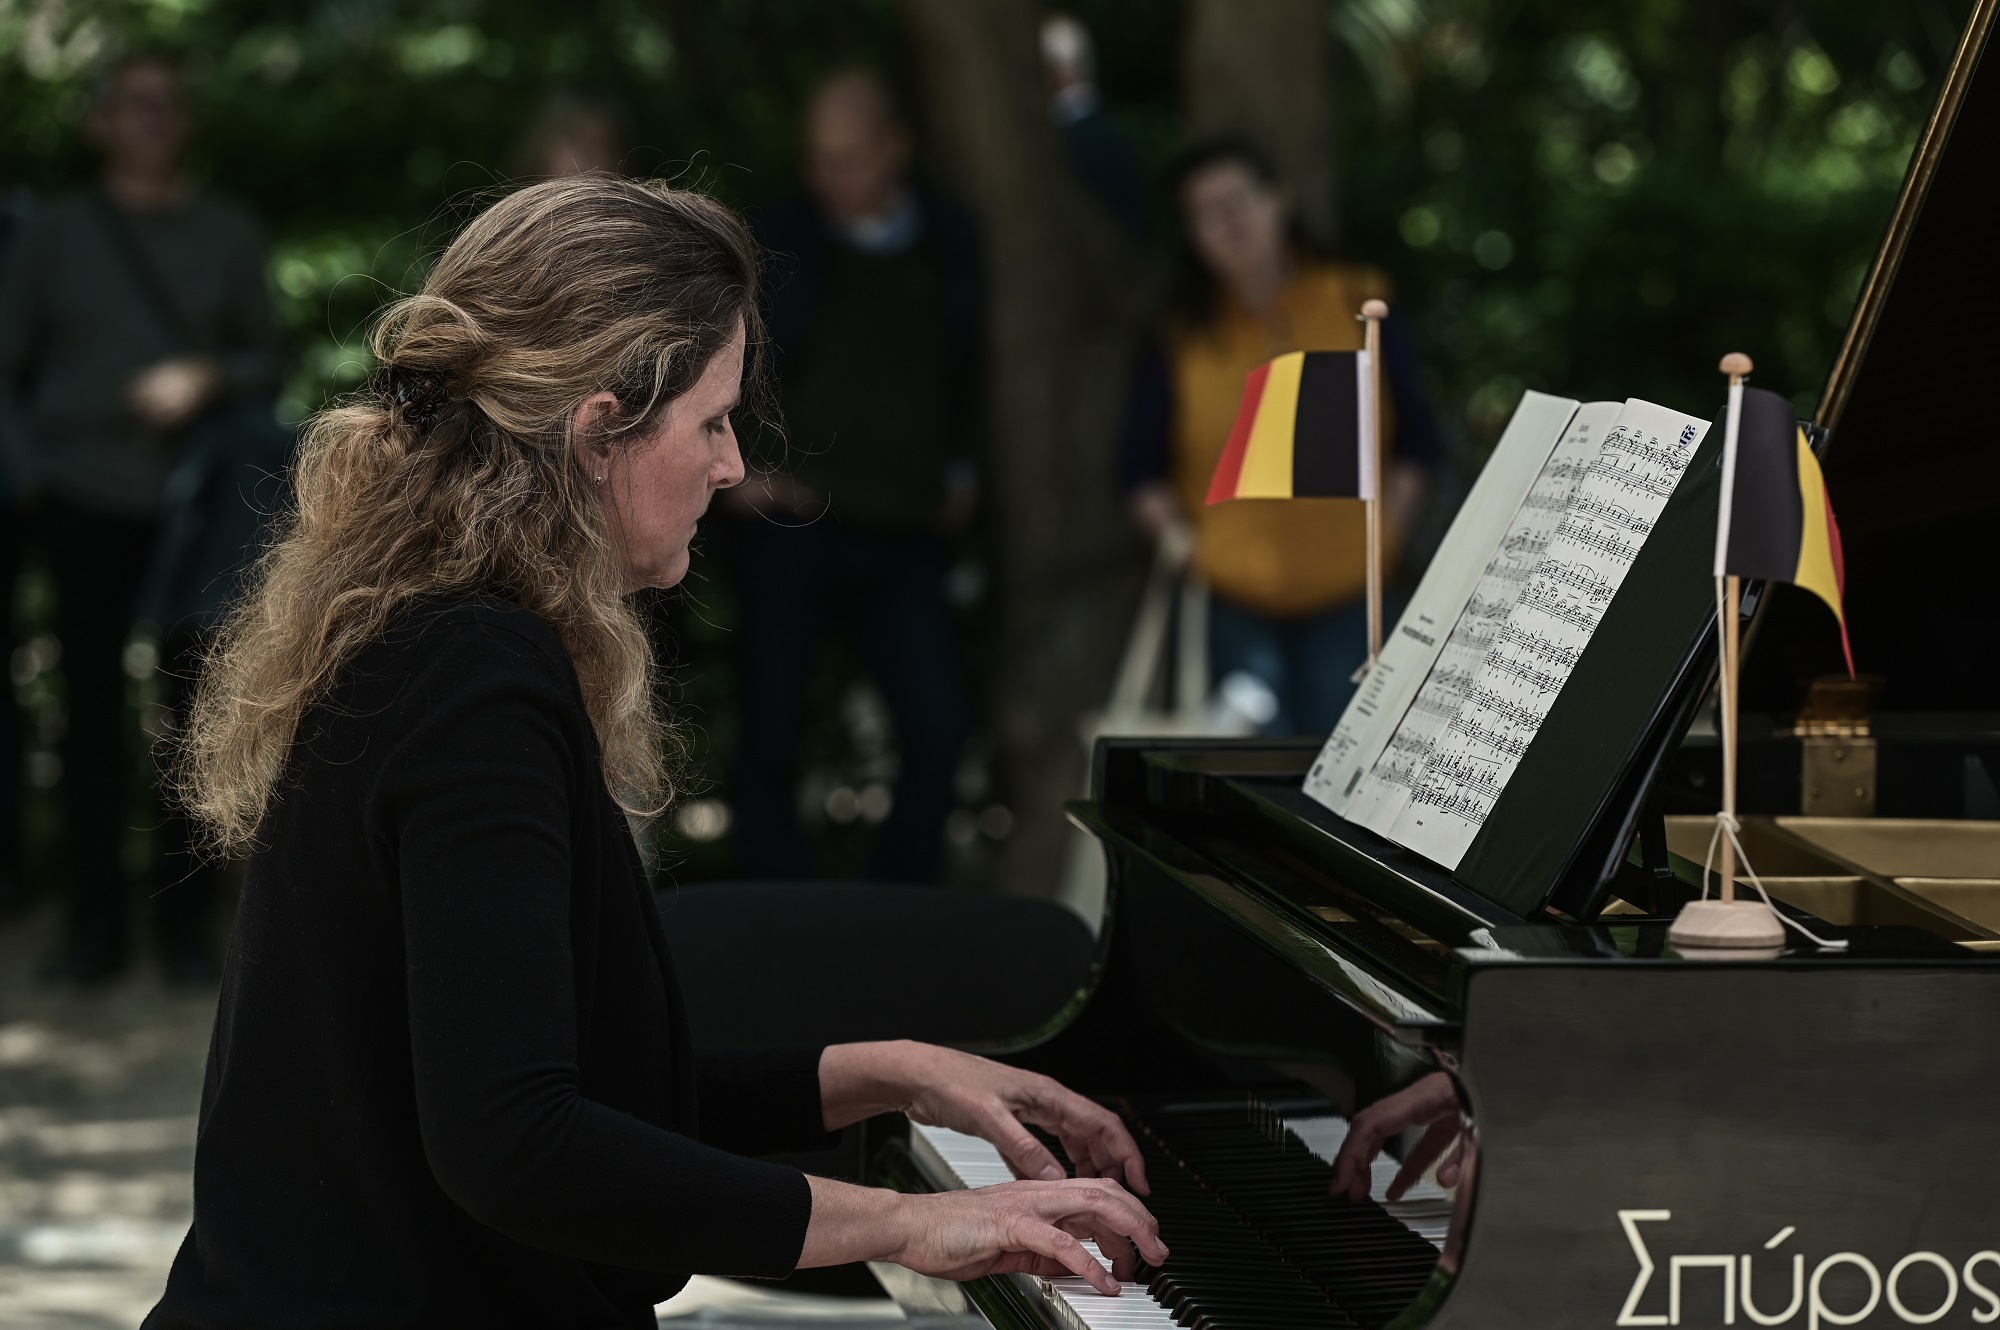 “Piano City Athens”: Δωρεάν συναυλίες πιάνου από σήμερα έως την Κυριακή σε όλη την Αθήνα – Από πάρκα μέχρι… σπίτια καλλιτεχνών